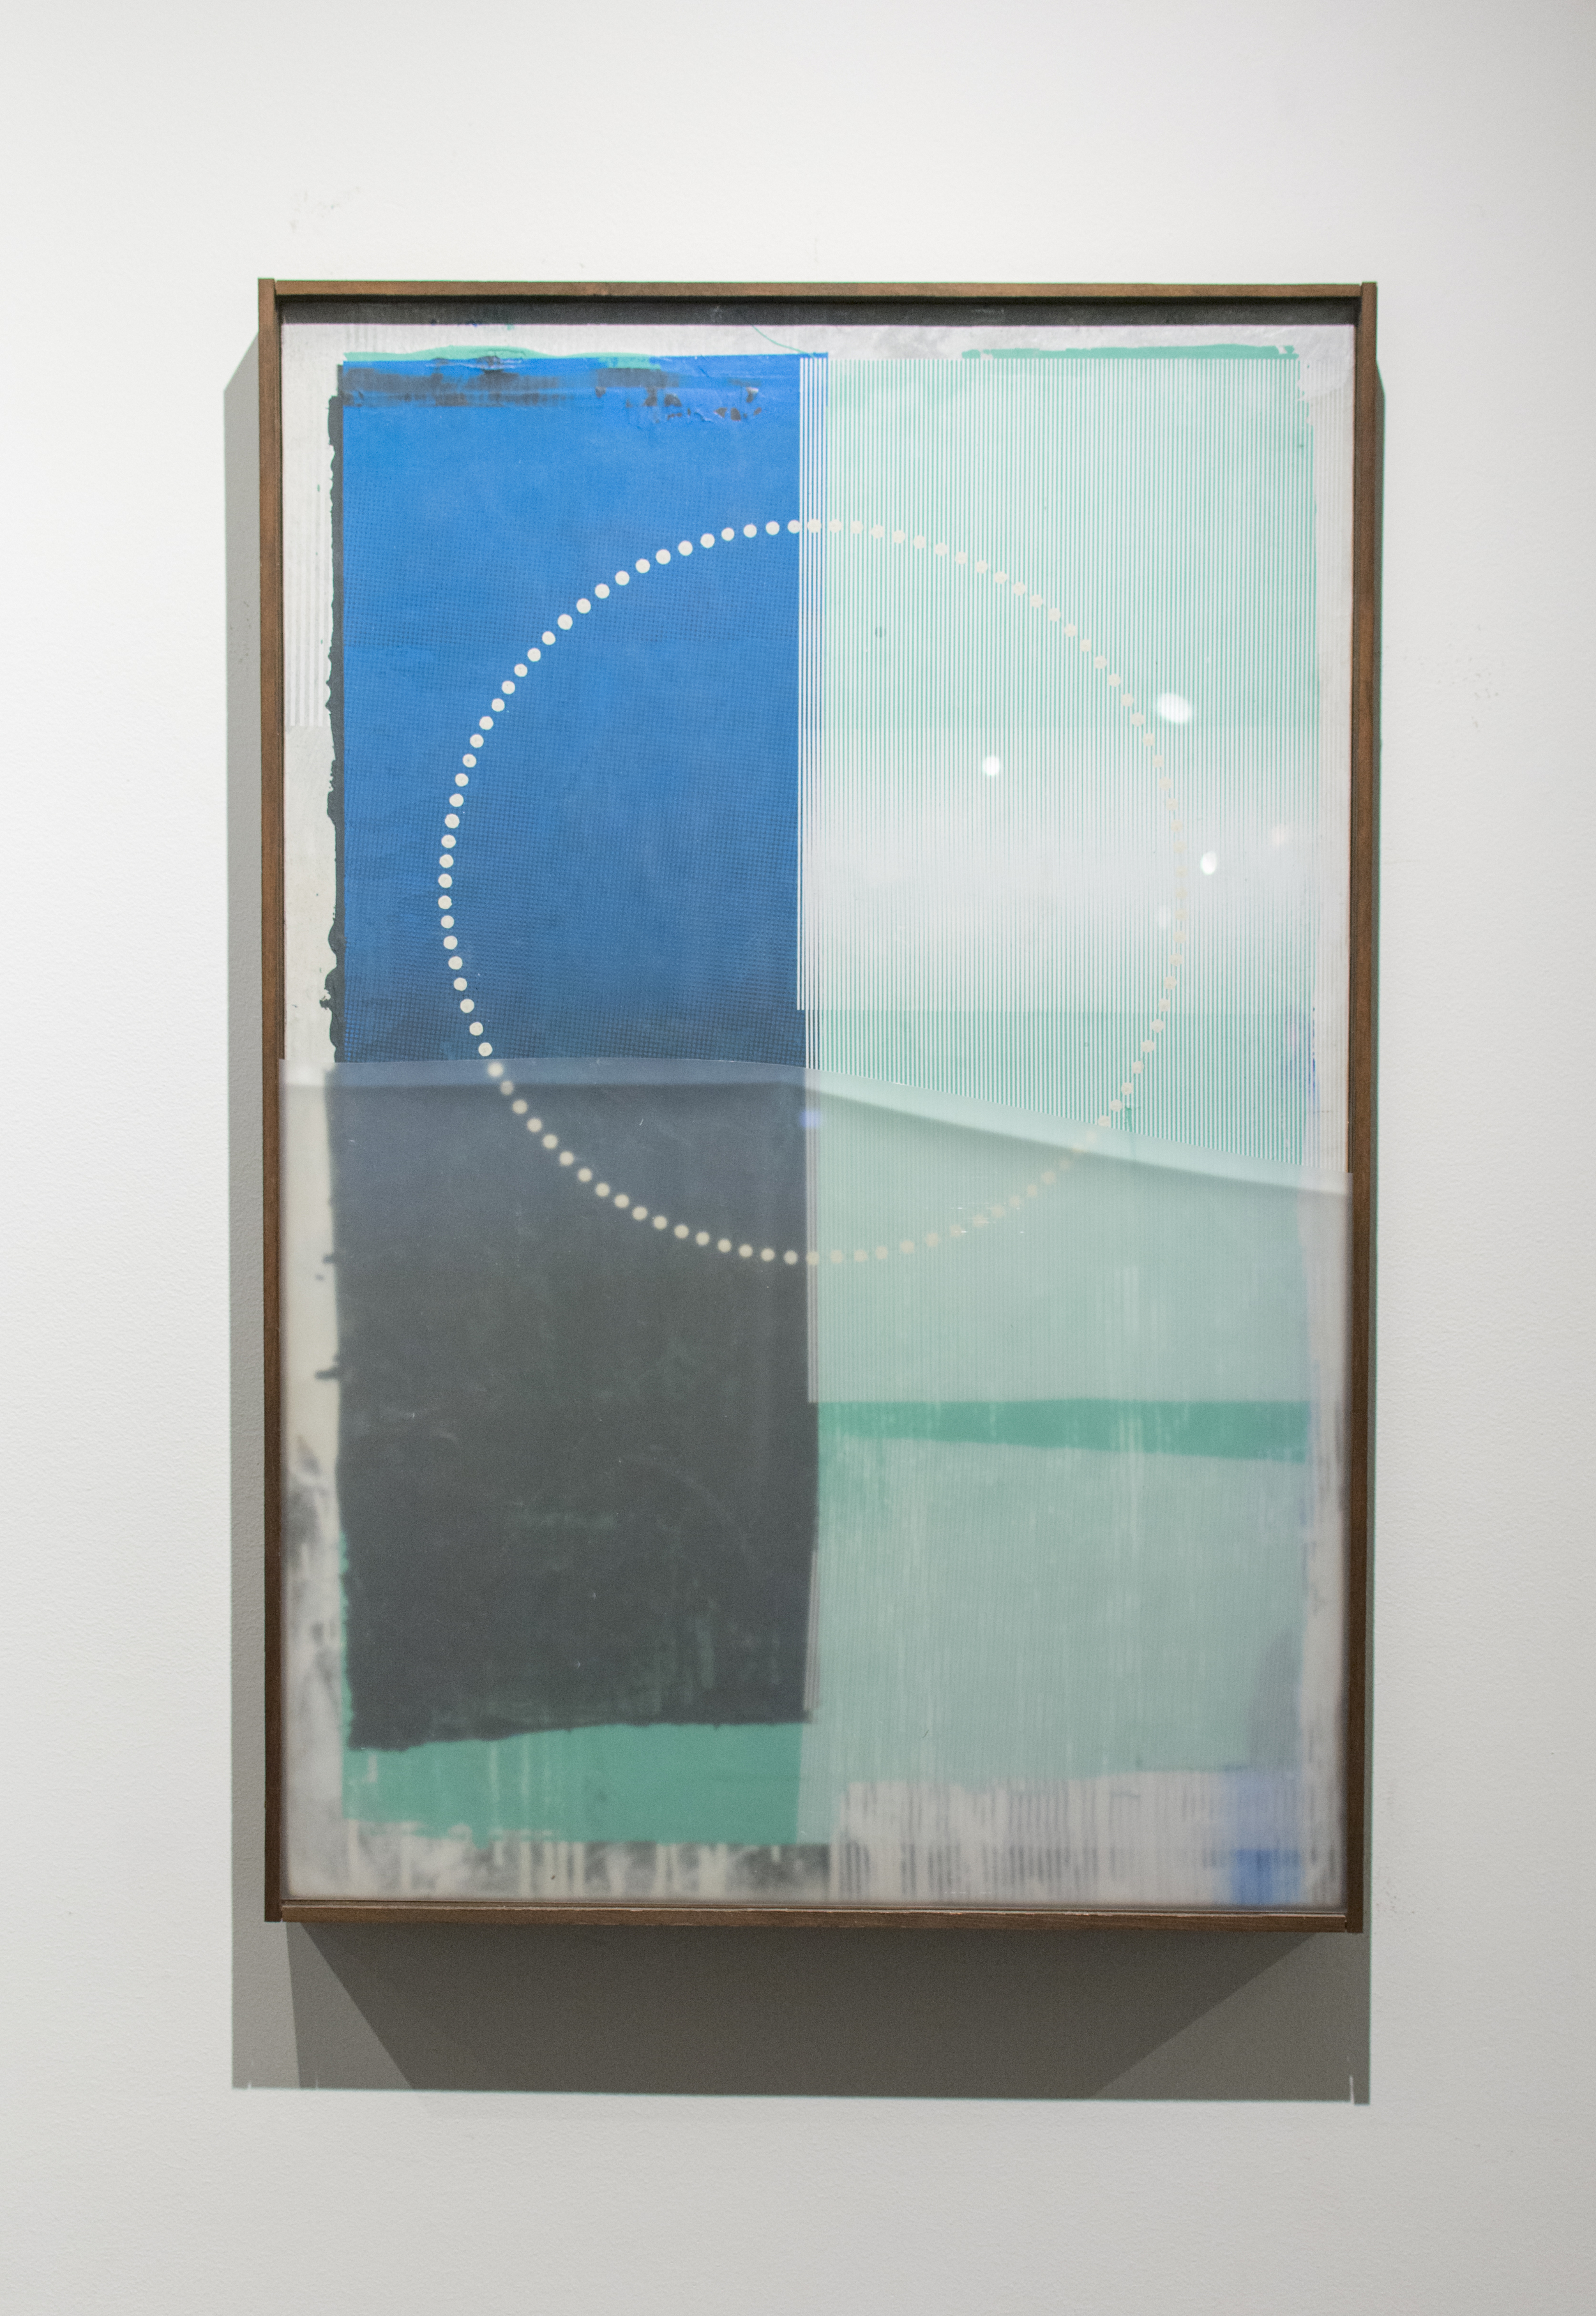   Erik Otto, Radiant 1, 2016. Enamel, acrylic, spray paint, screen print, framed with mylar. 24 x 36 in.&nbsp;  